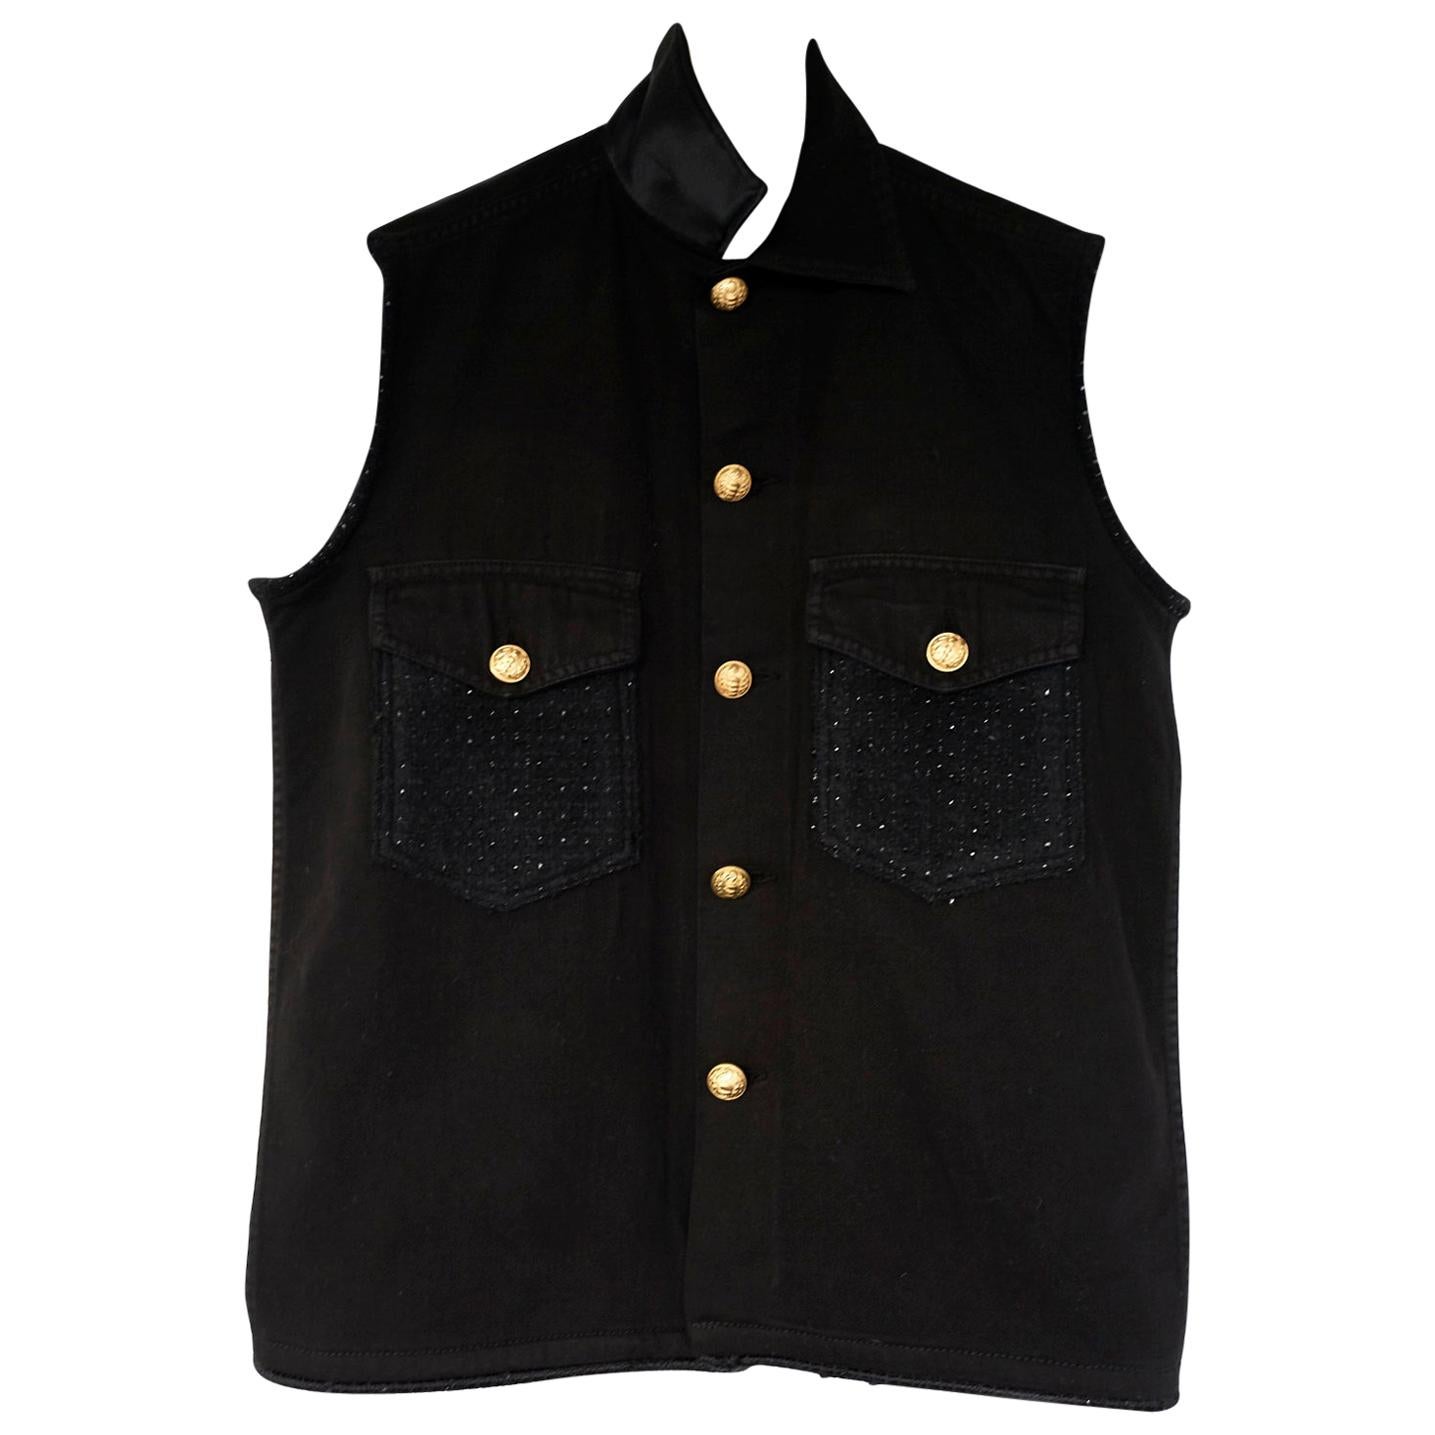 Sleeveless Jacket Vest Black Cotton Tweed Military Black Gold Buttons J Dauphin